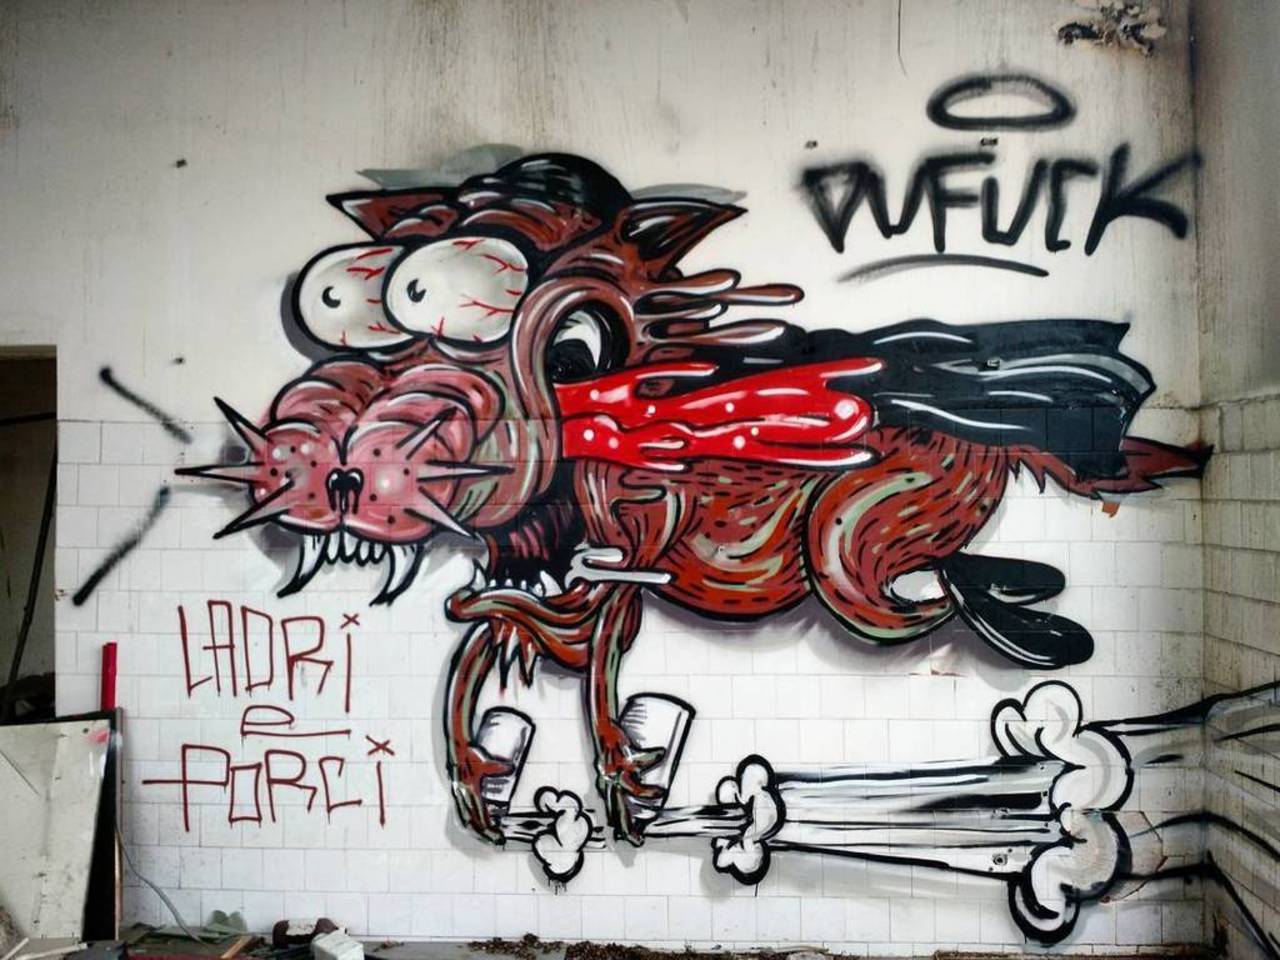 RT @StArtEverywhere: Ladri e porci by #dufuck #streetart #streetartphotography #poetry #secretplace #graffiti #streetartandgraffiti #str… https://t.co/wVNGfdlCtt